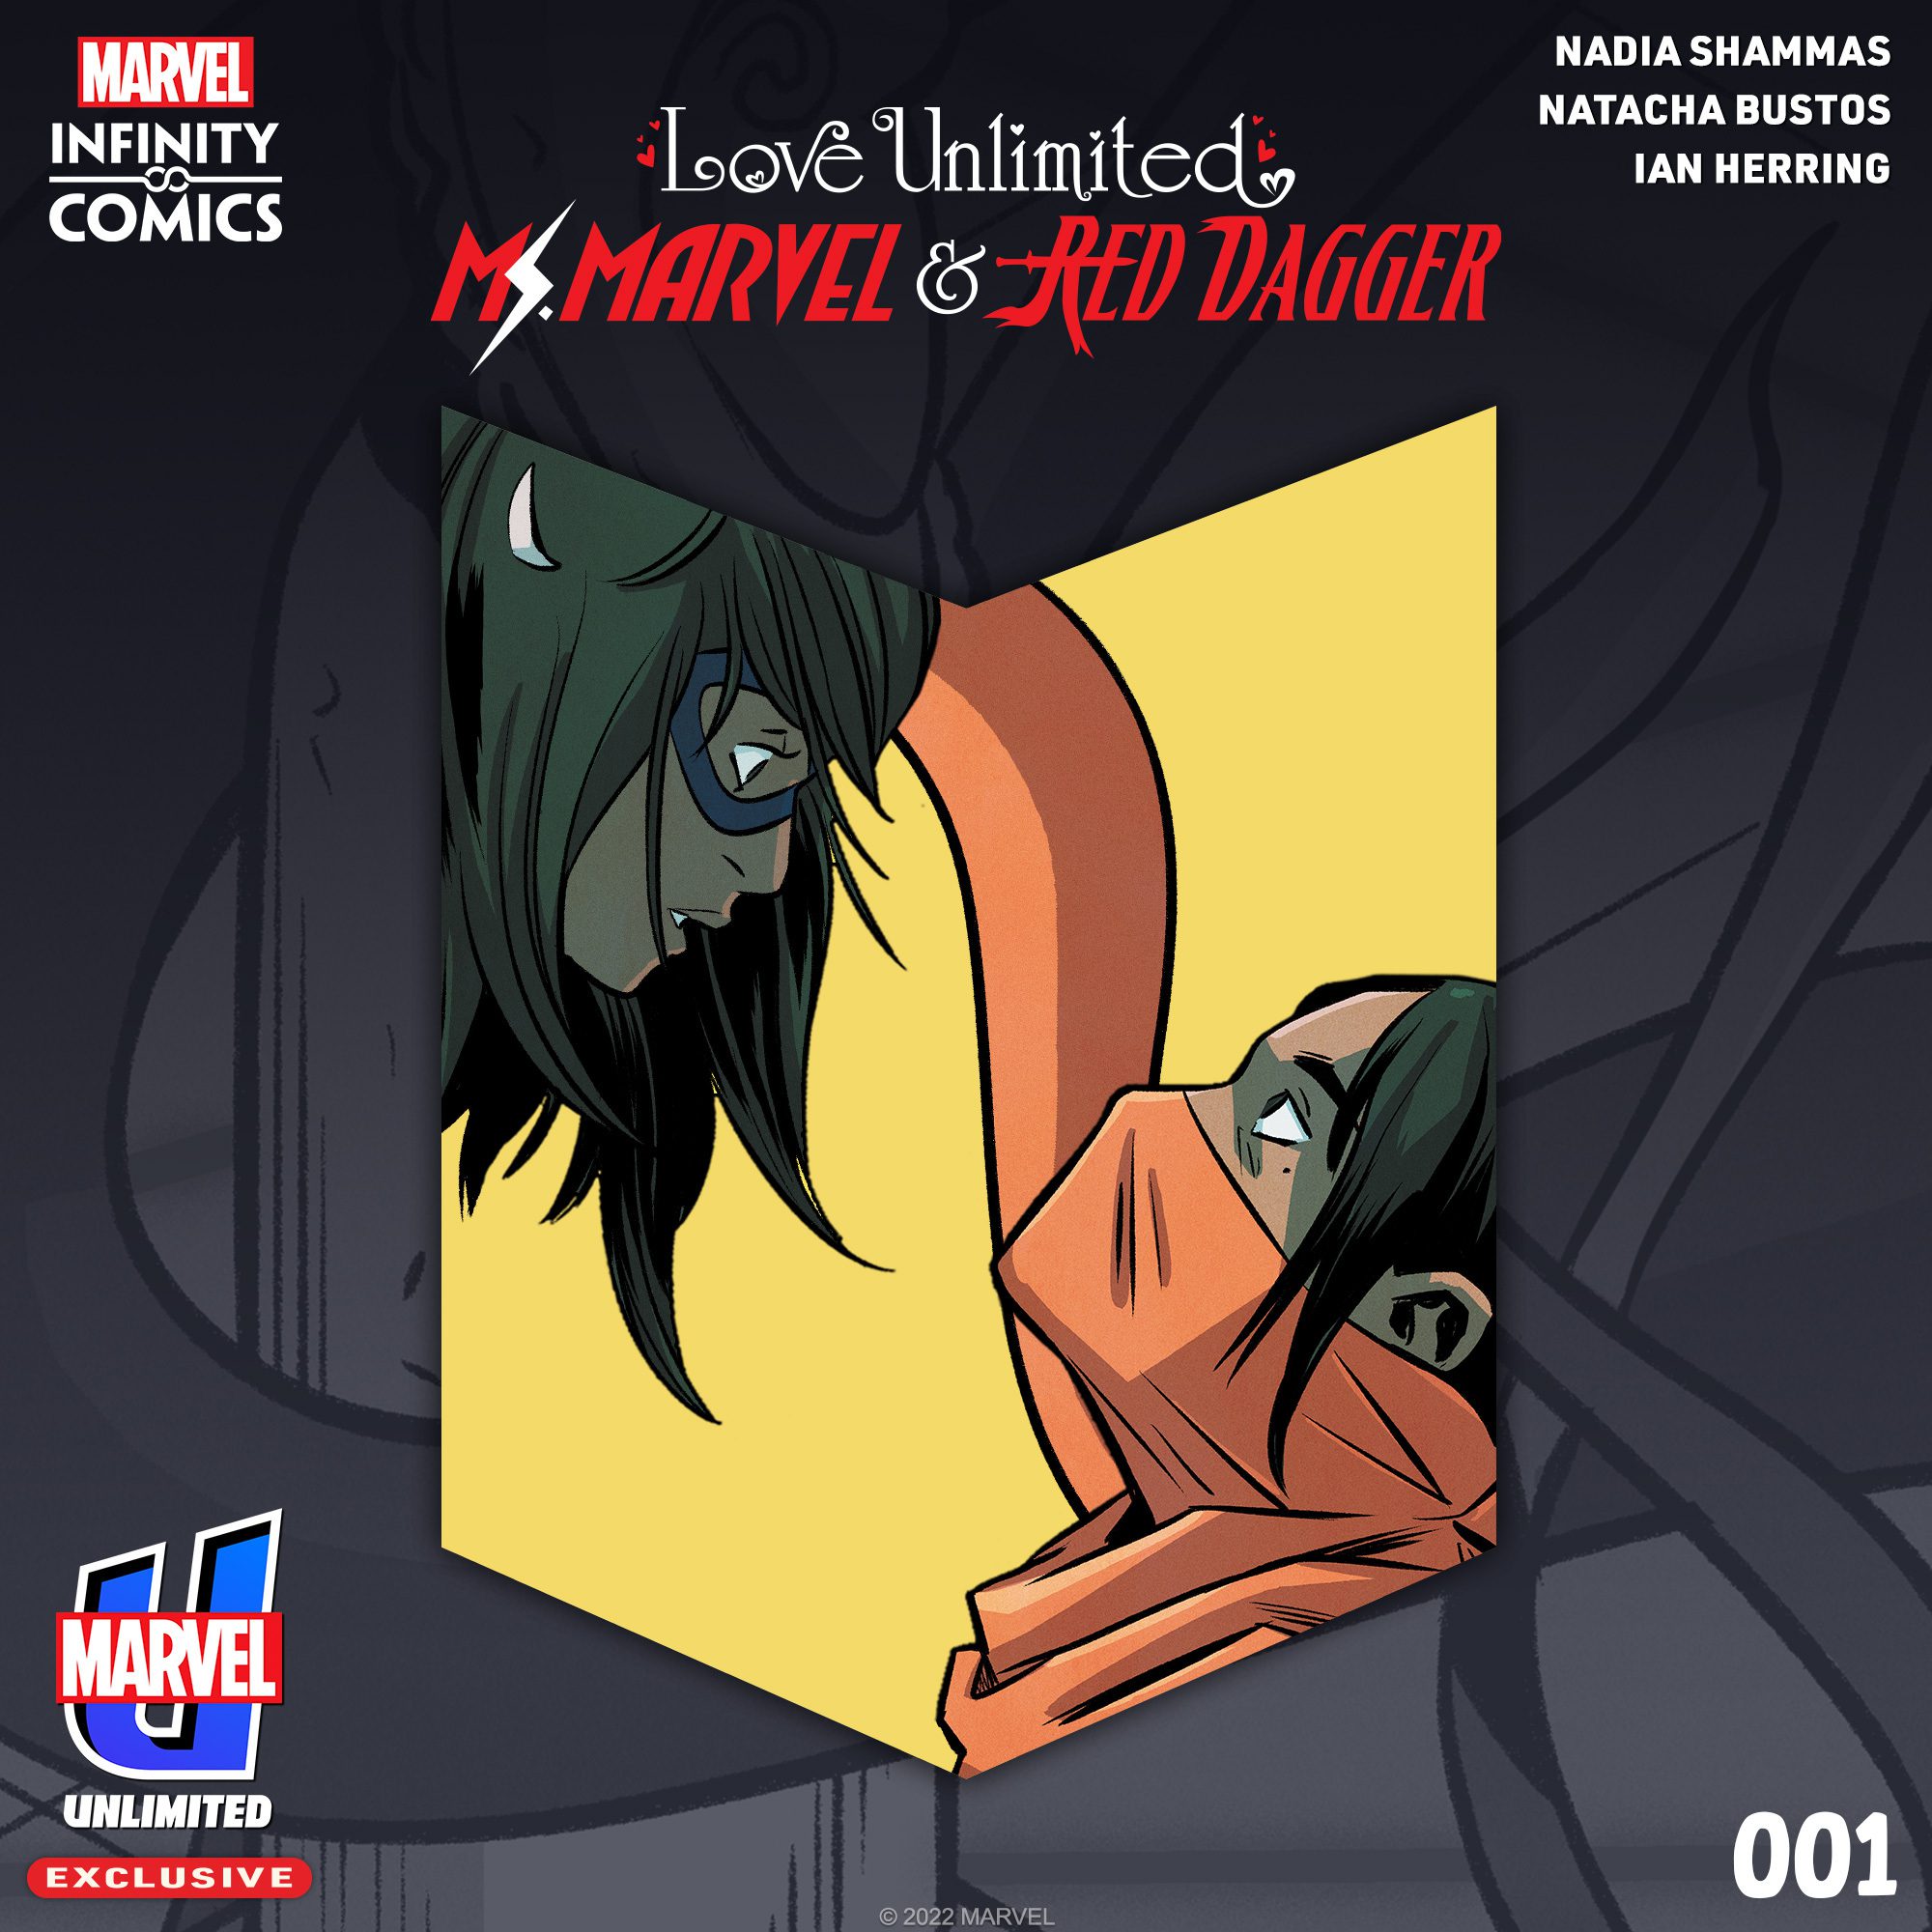 Love Unlimited promo art for Ms. Marvel & Red Dagger